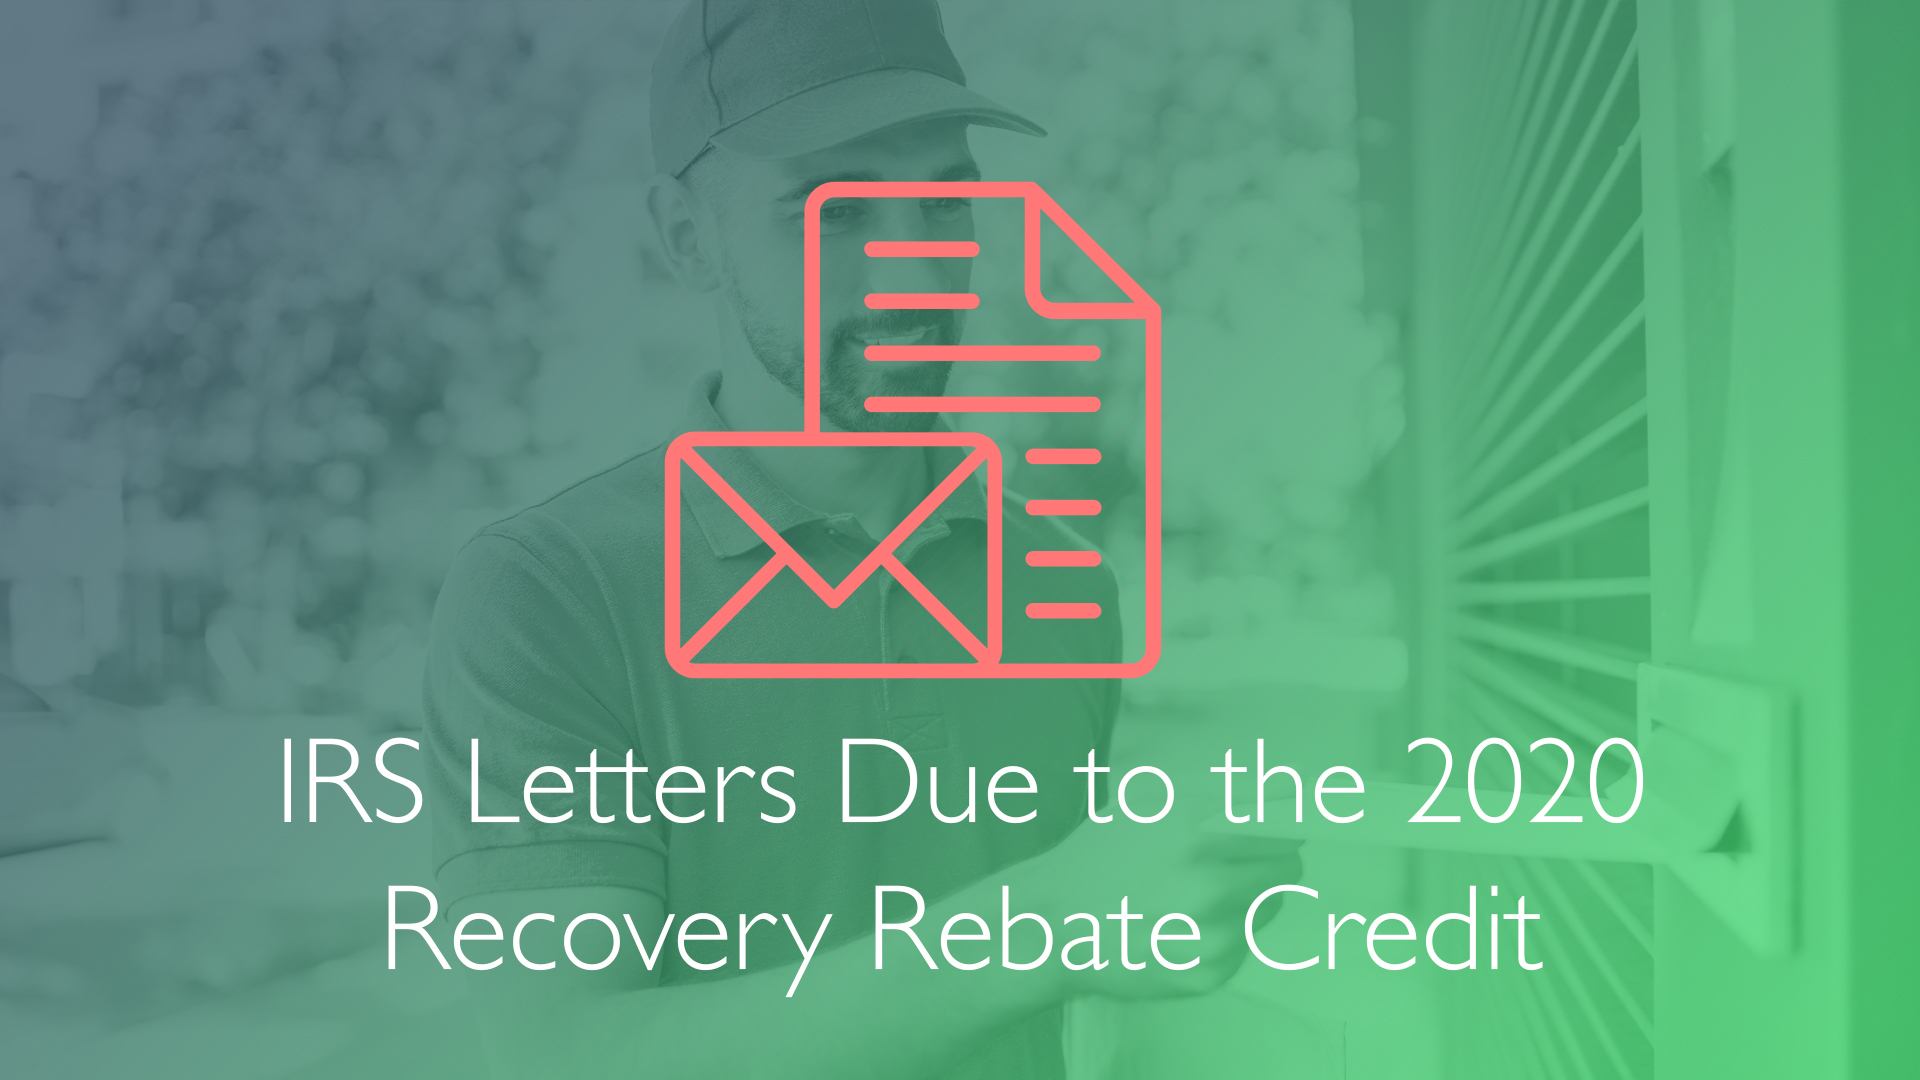 recovery-rebate-credit-santa-barbara-tax-products-group